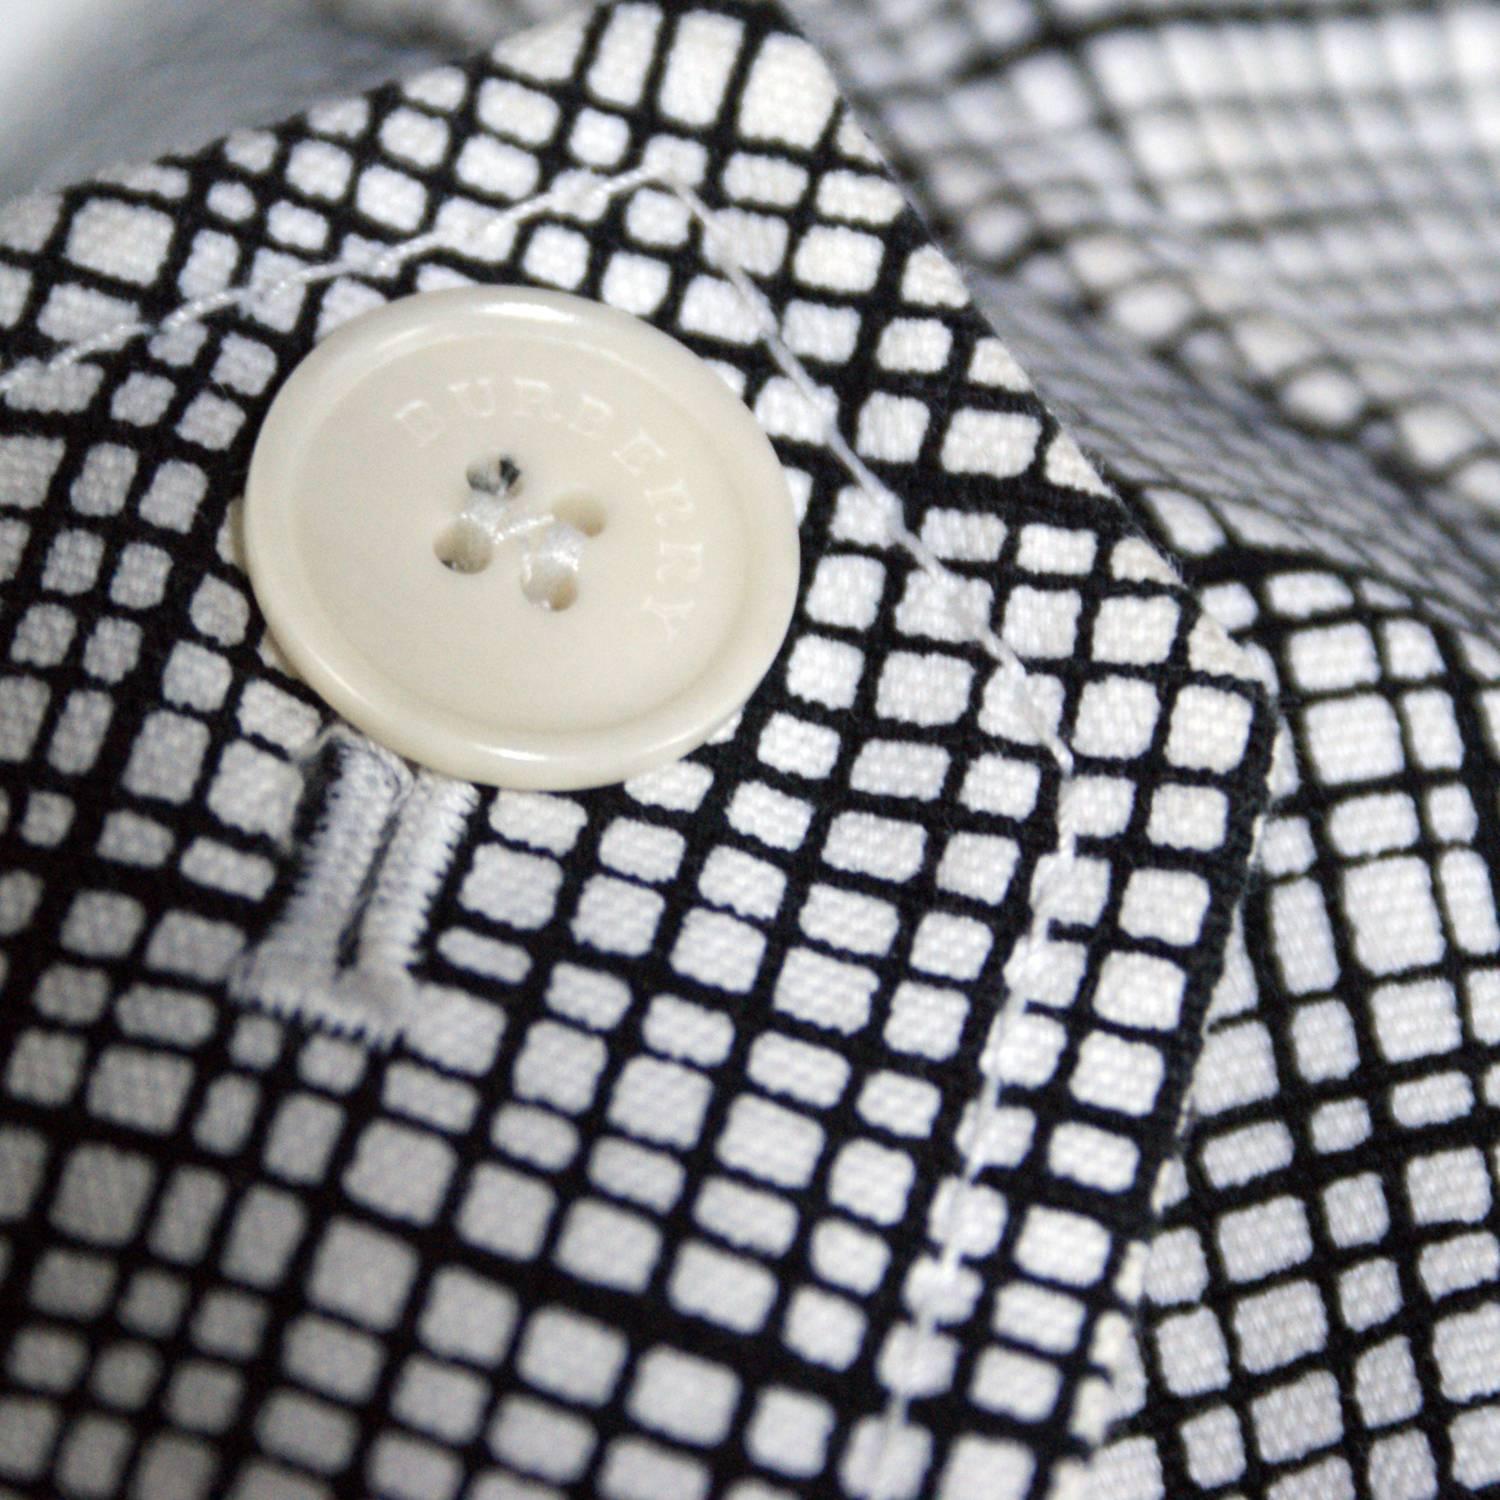 Black and white design
Cream logo buttons
Clasp closure at the neckline
